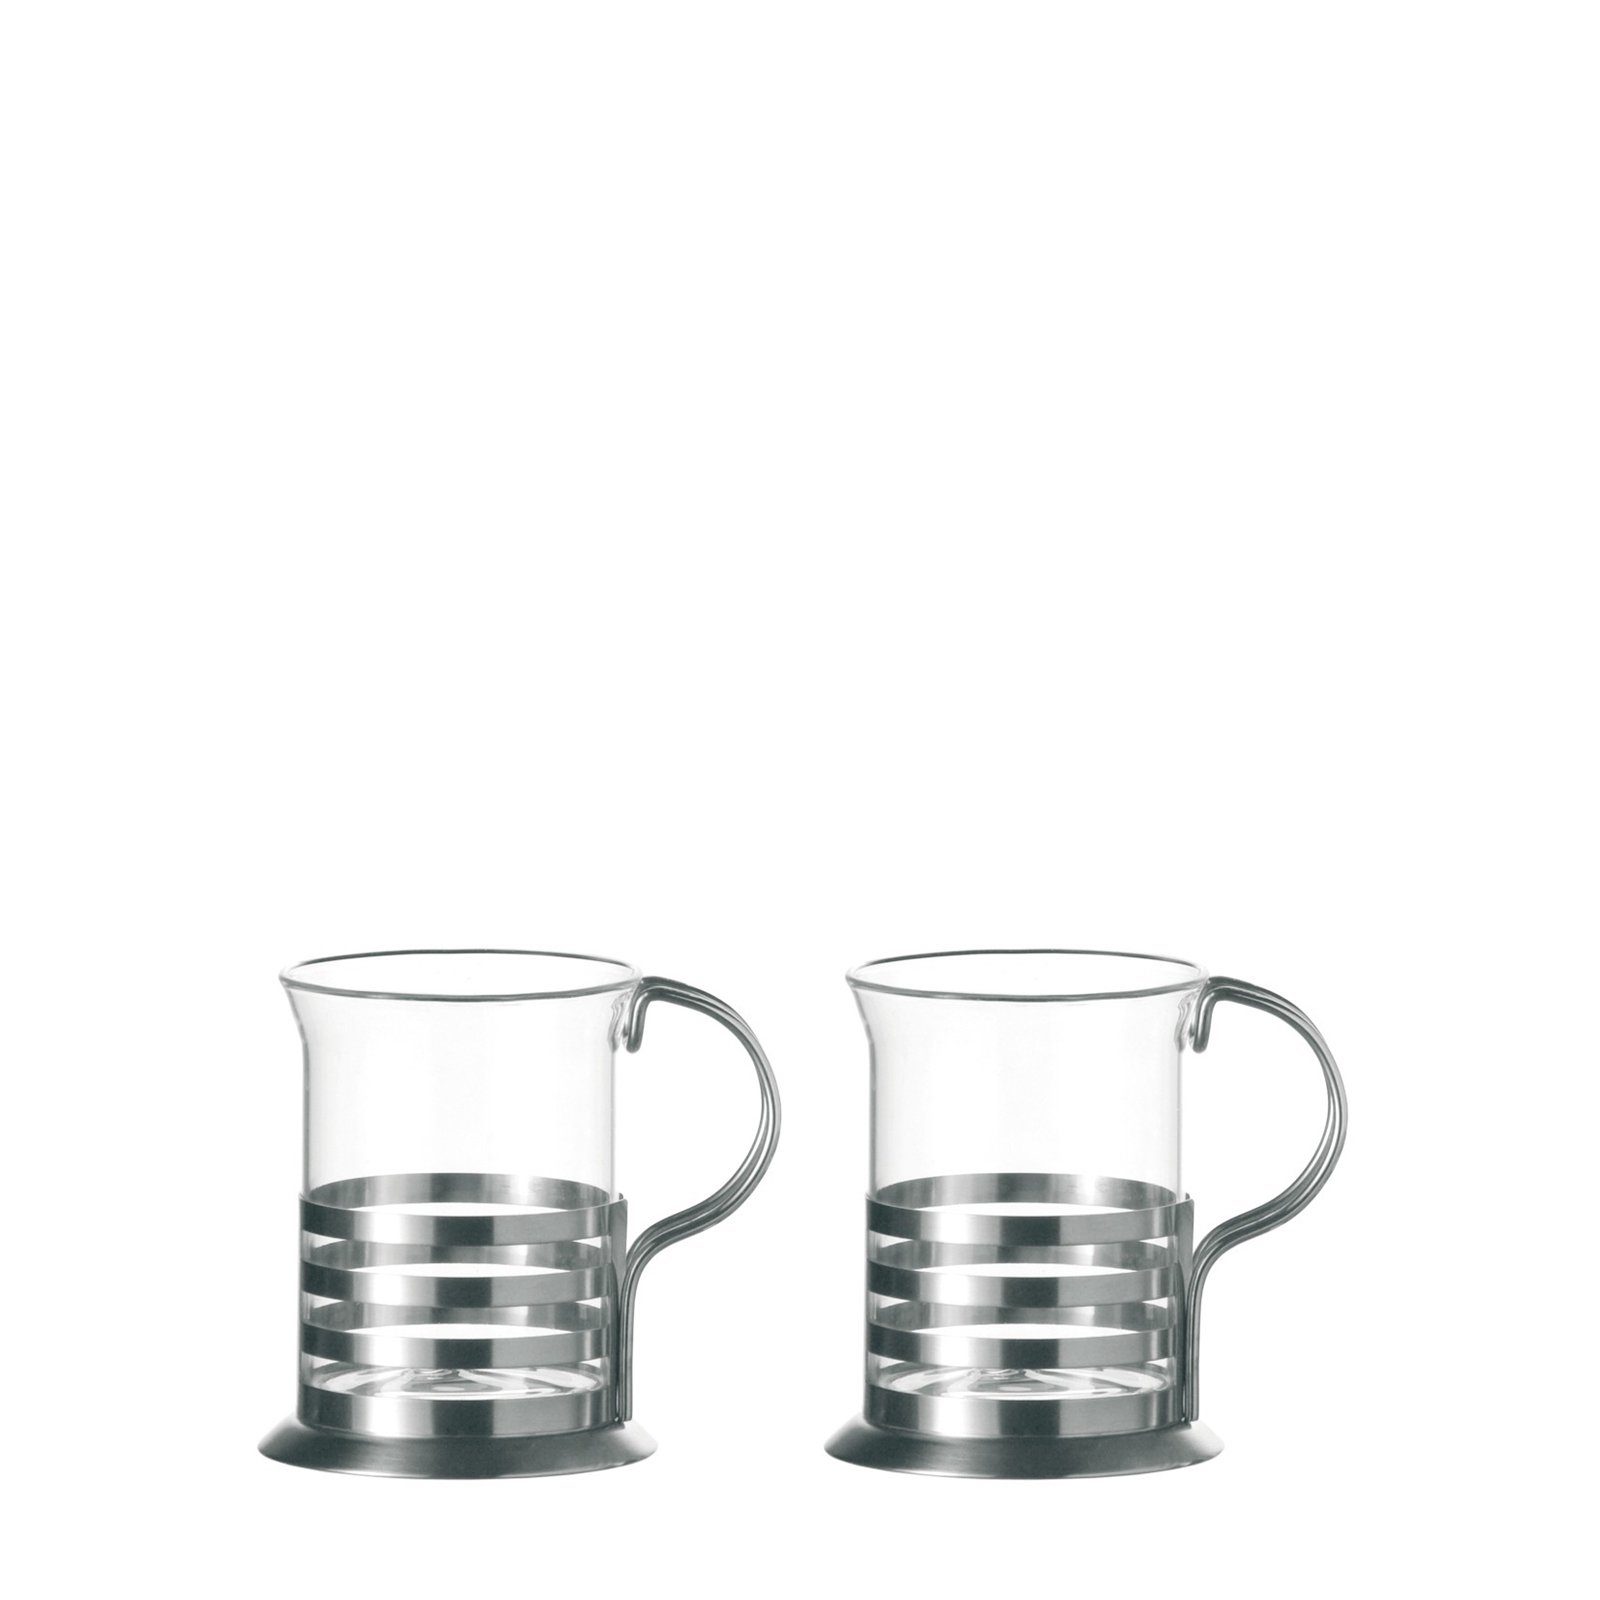 Teeglas Glas, Hitzebeständig widerstandsfähig Teetasse und LEONARDO Balance, 2er-Set